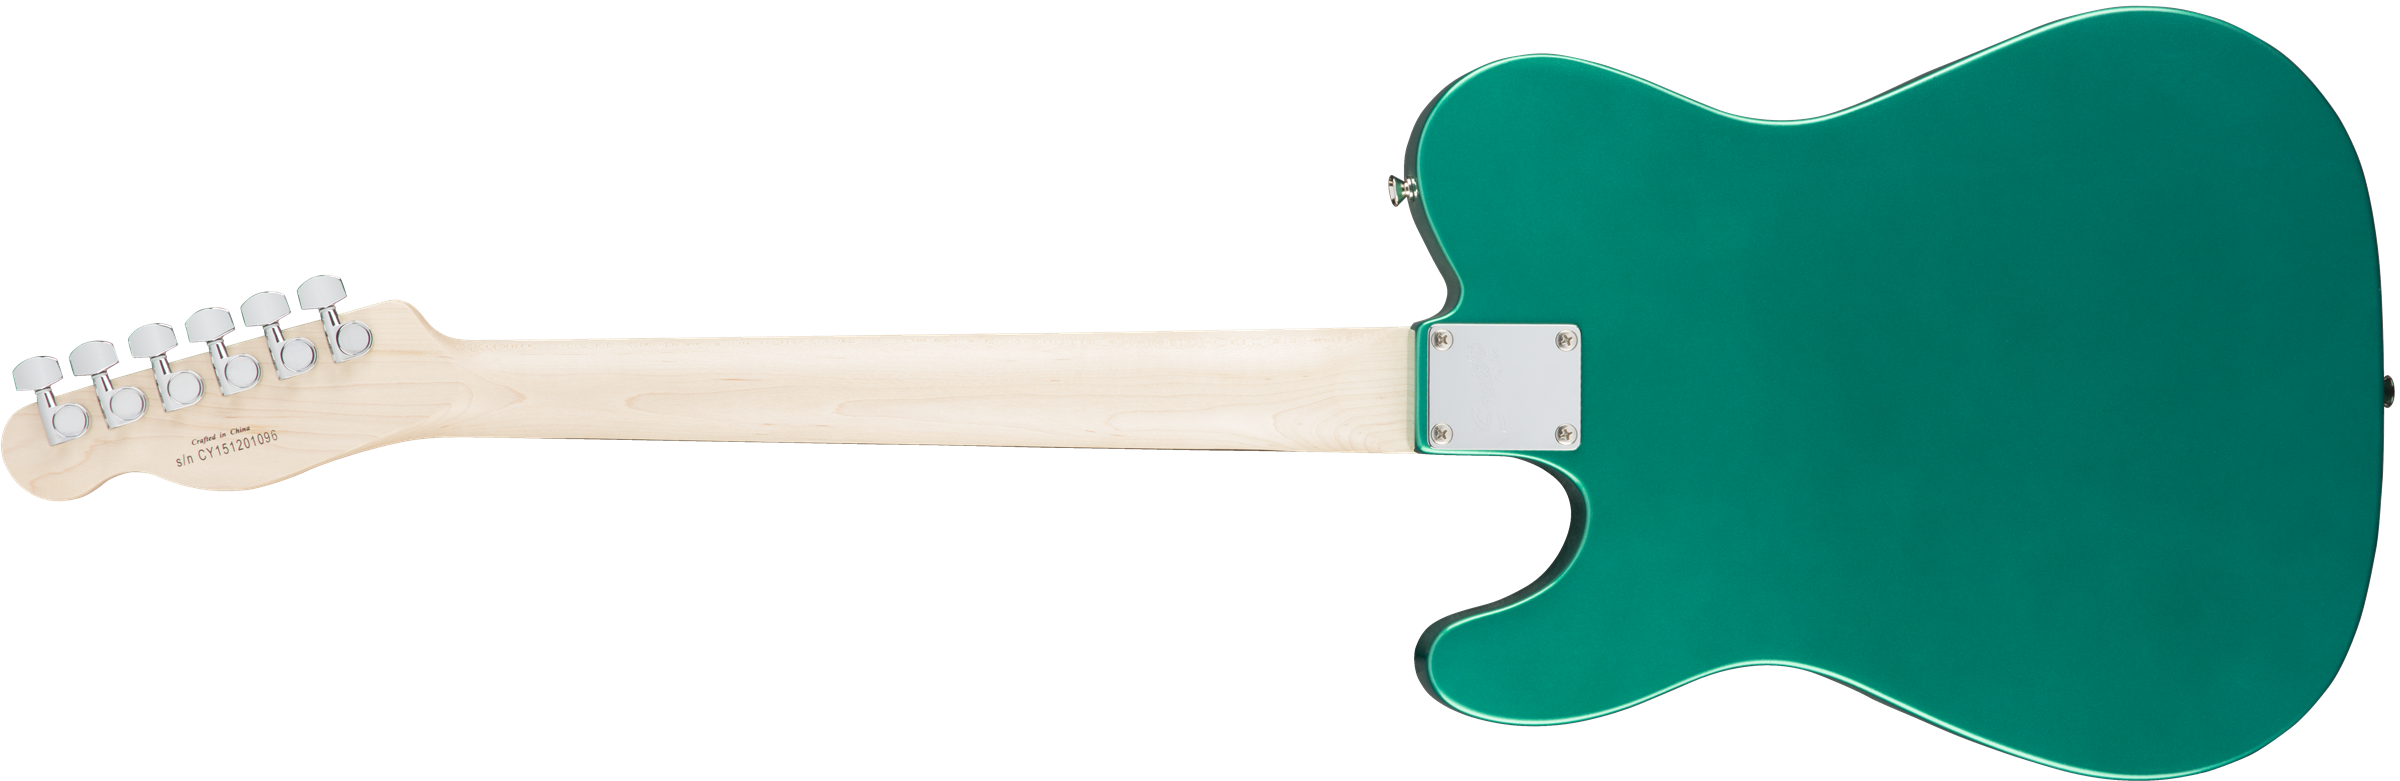 Squier Tele Affinity Series 2019 Lau - Race Green - Tel shape electric guitar - Variation 5